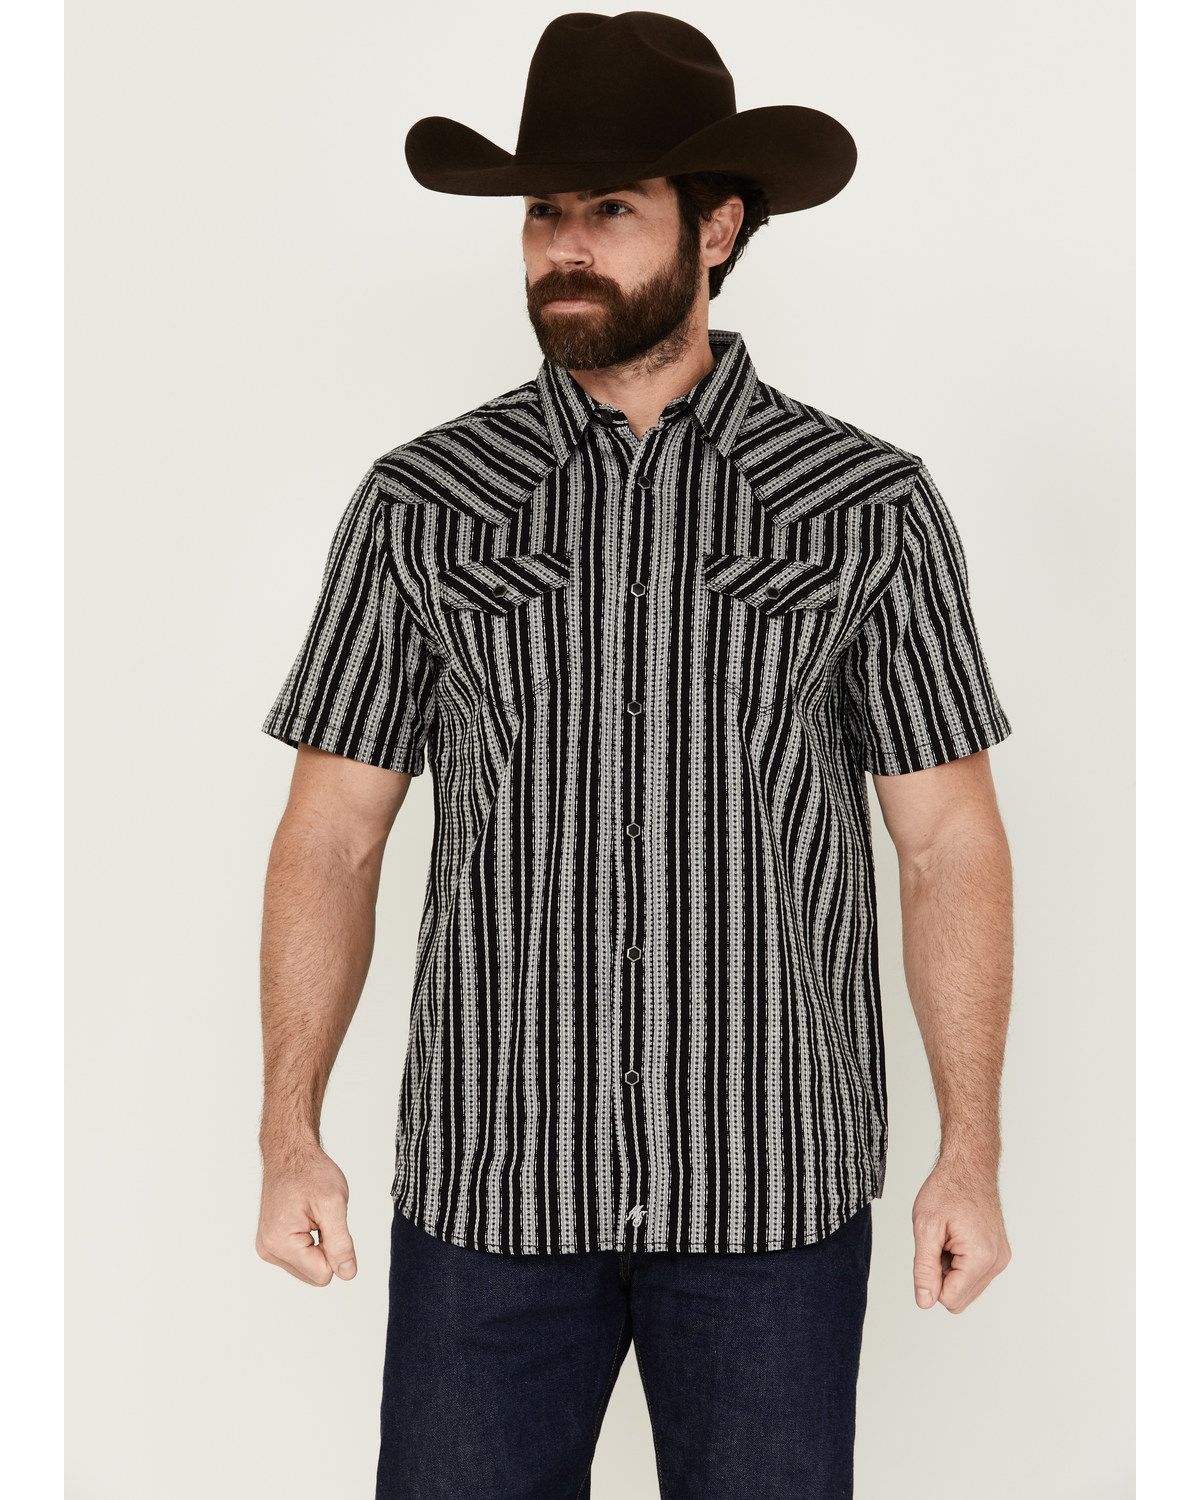 Moonshine Spirit Men's Flock Striped Short Sleeve Snap Western Shirt